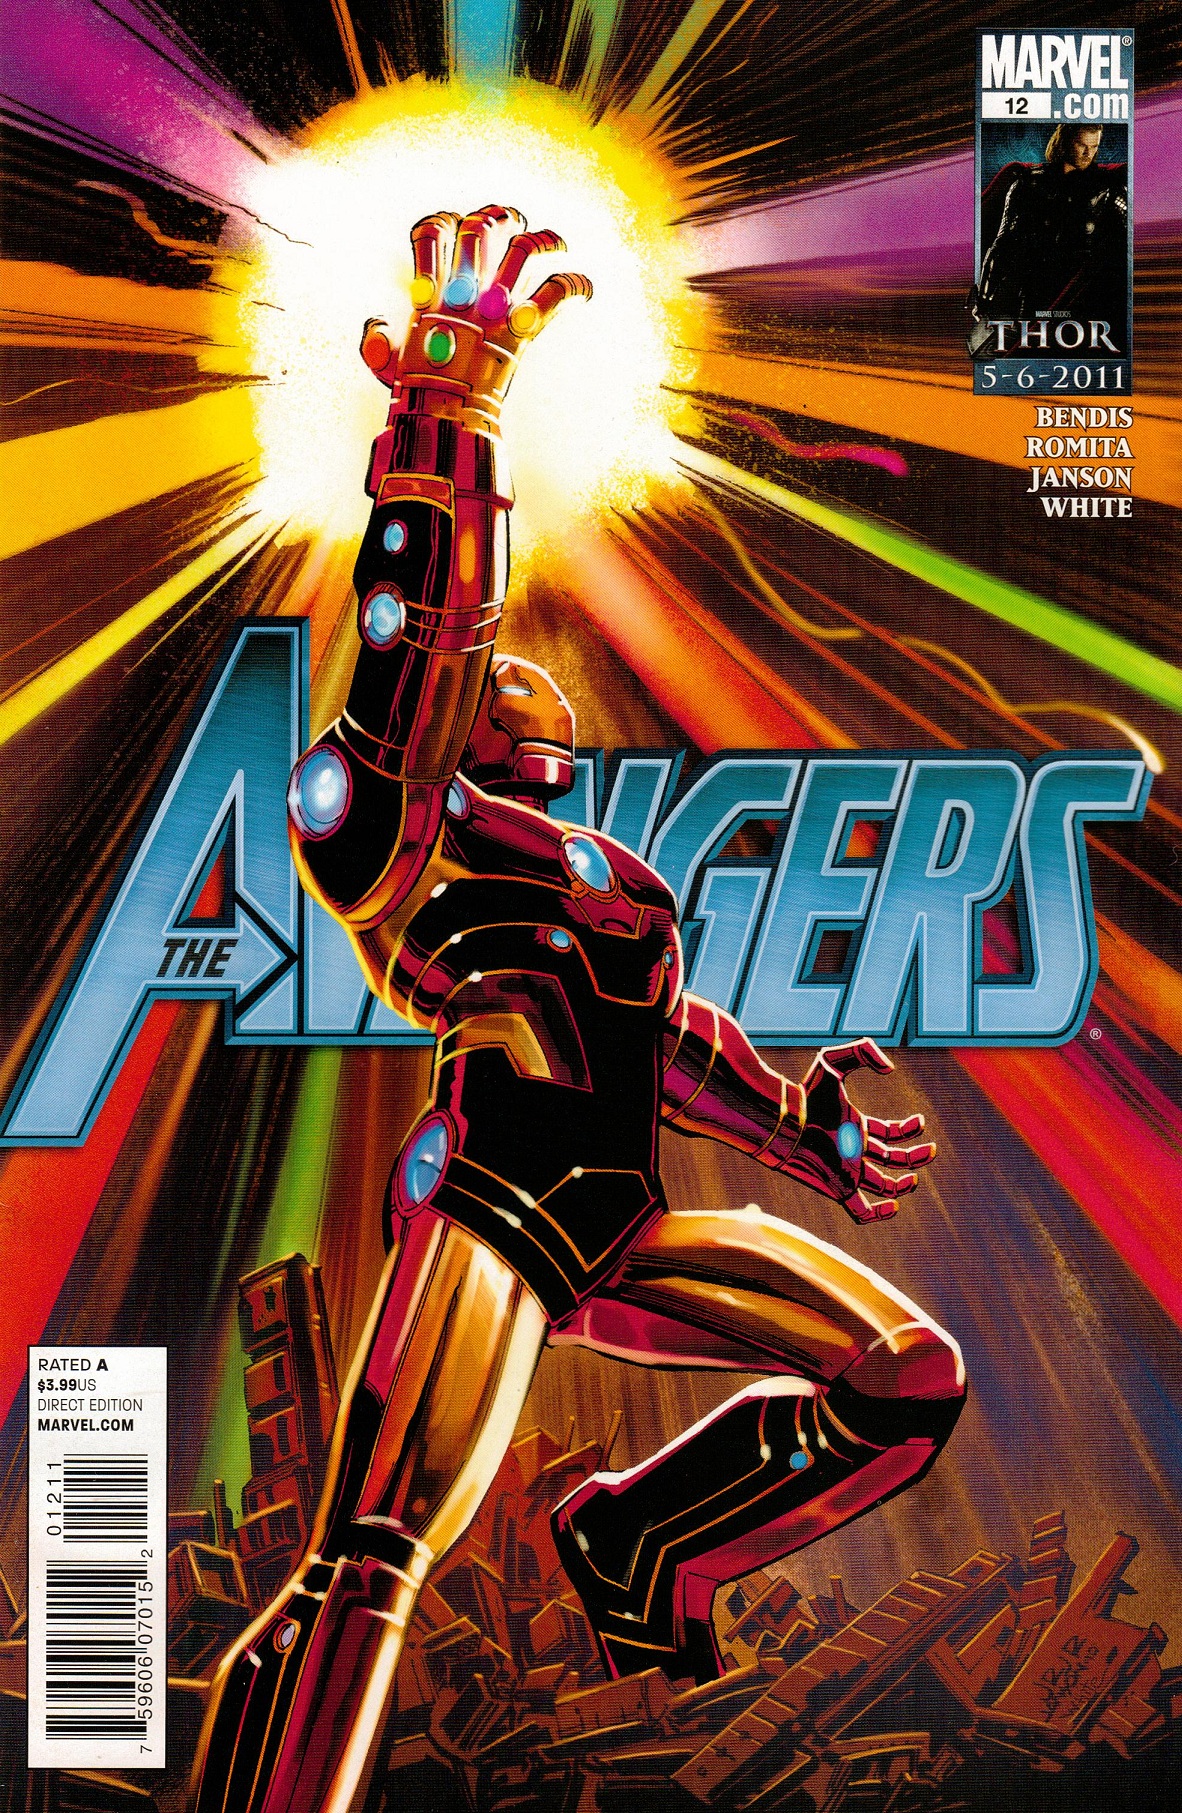 The Avengers Vol. 4 #12